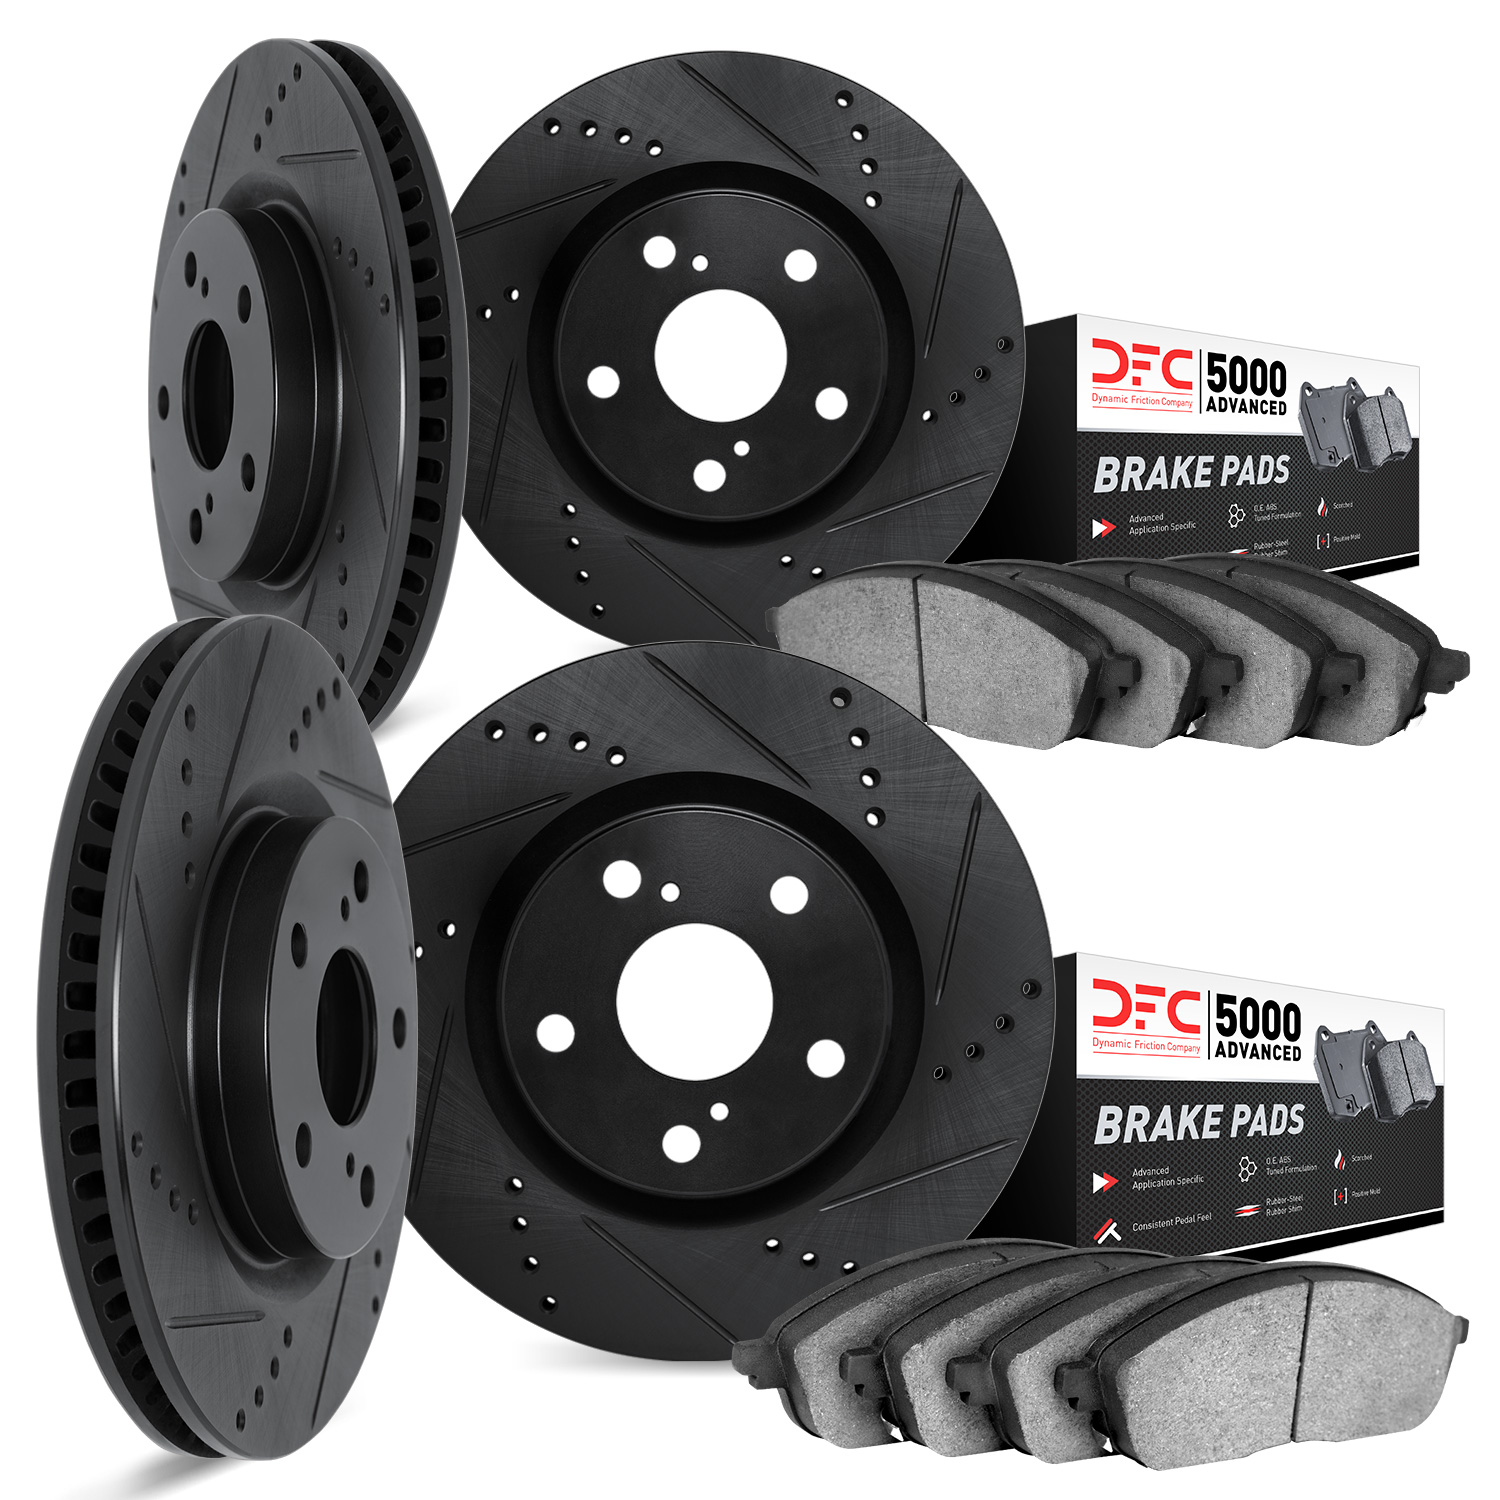 8504-40254 Drilled/Slotted Brake Rotors w/5000 Advanced Brake Pads Kit [Black], 2014-2021 Mopar, Position: Front and Rear